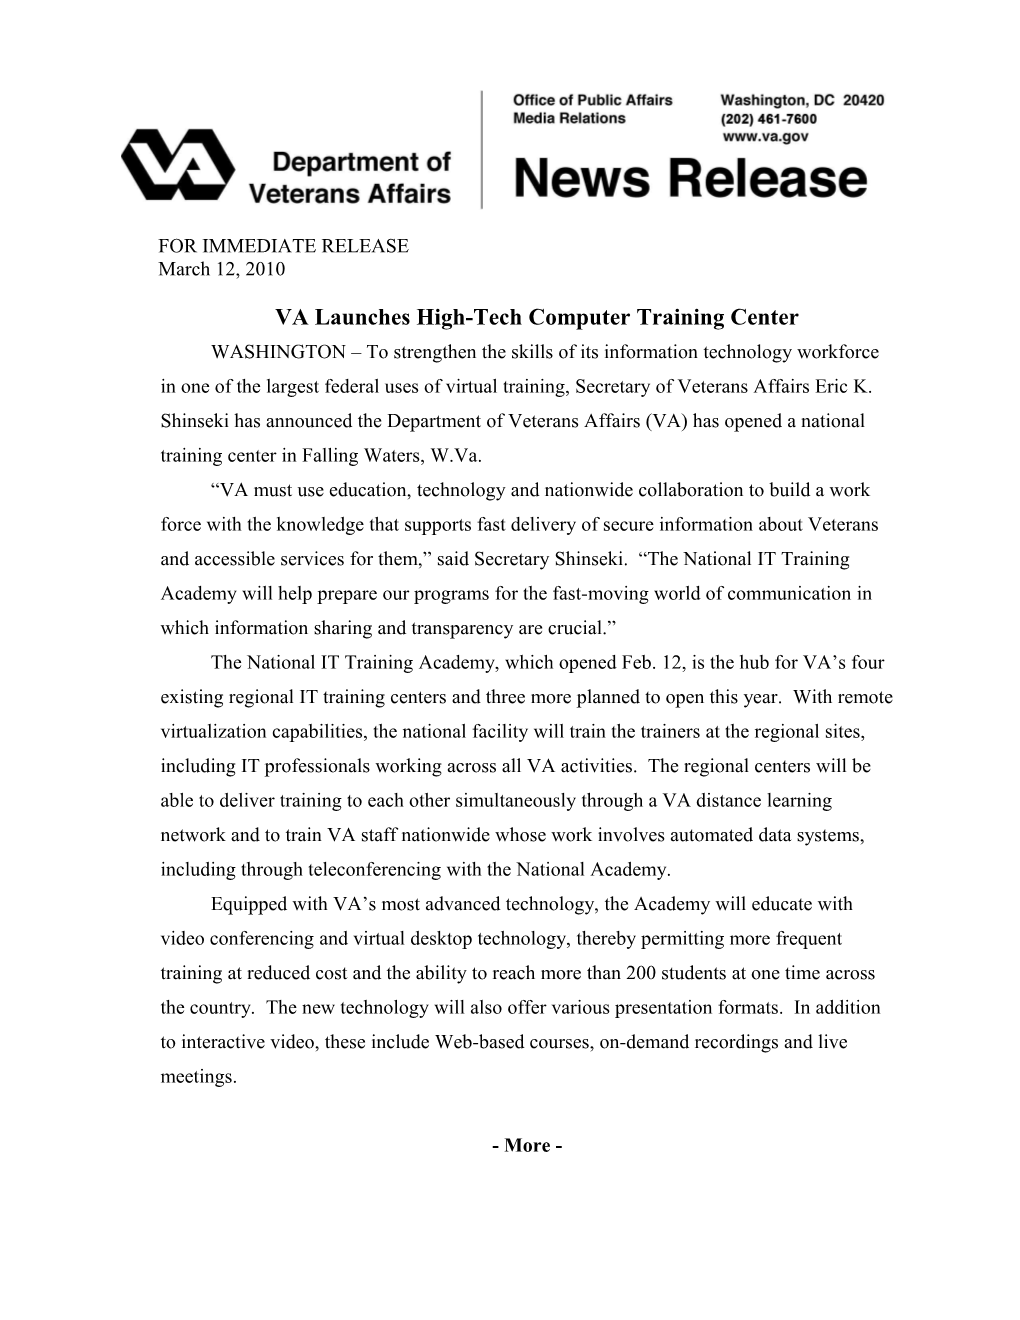 VA Launches High-Tech Computer Training Center